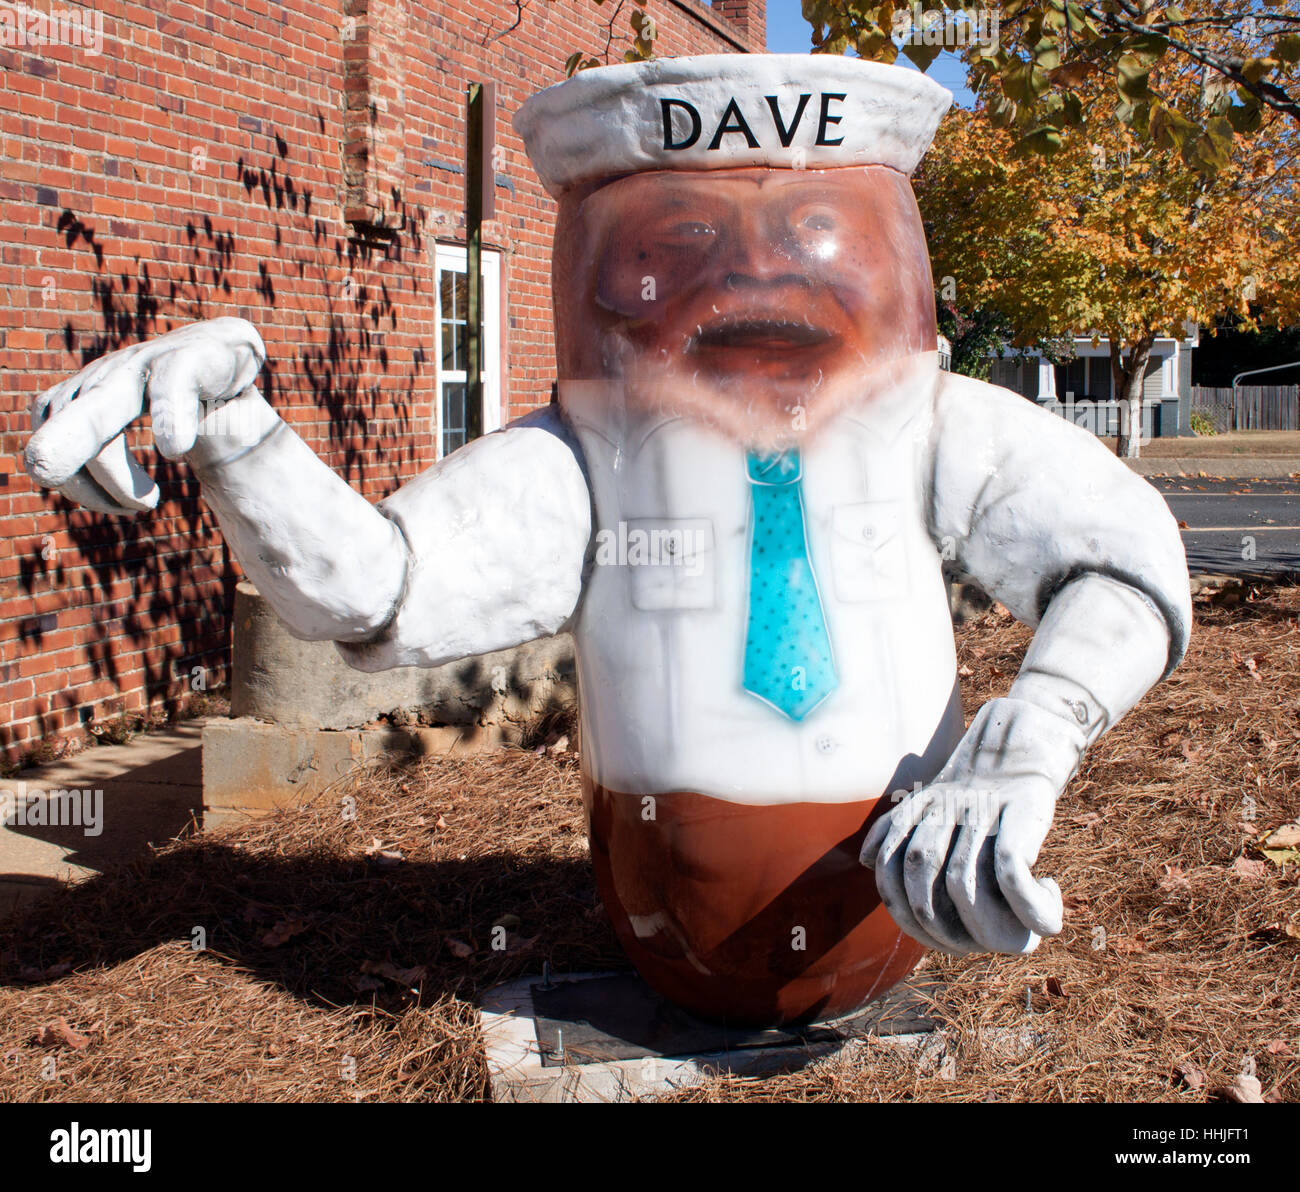 Dancin Dave the Human Peanut sculpture in Headland Alabama Stock Photo